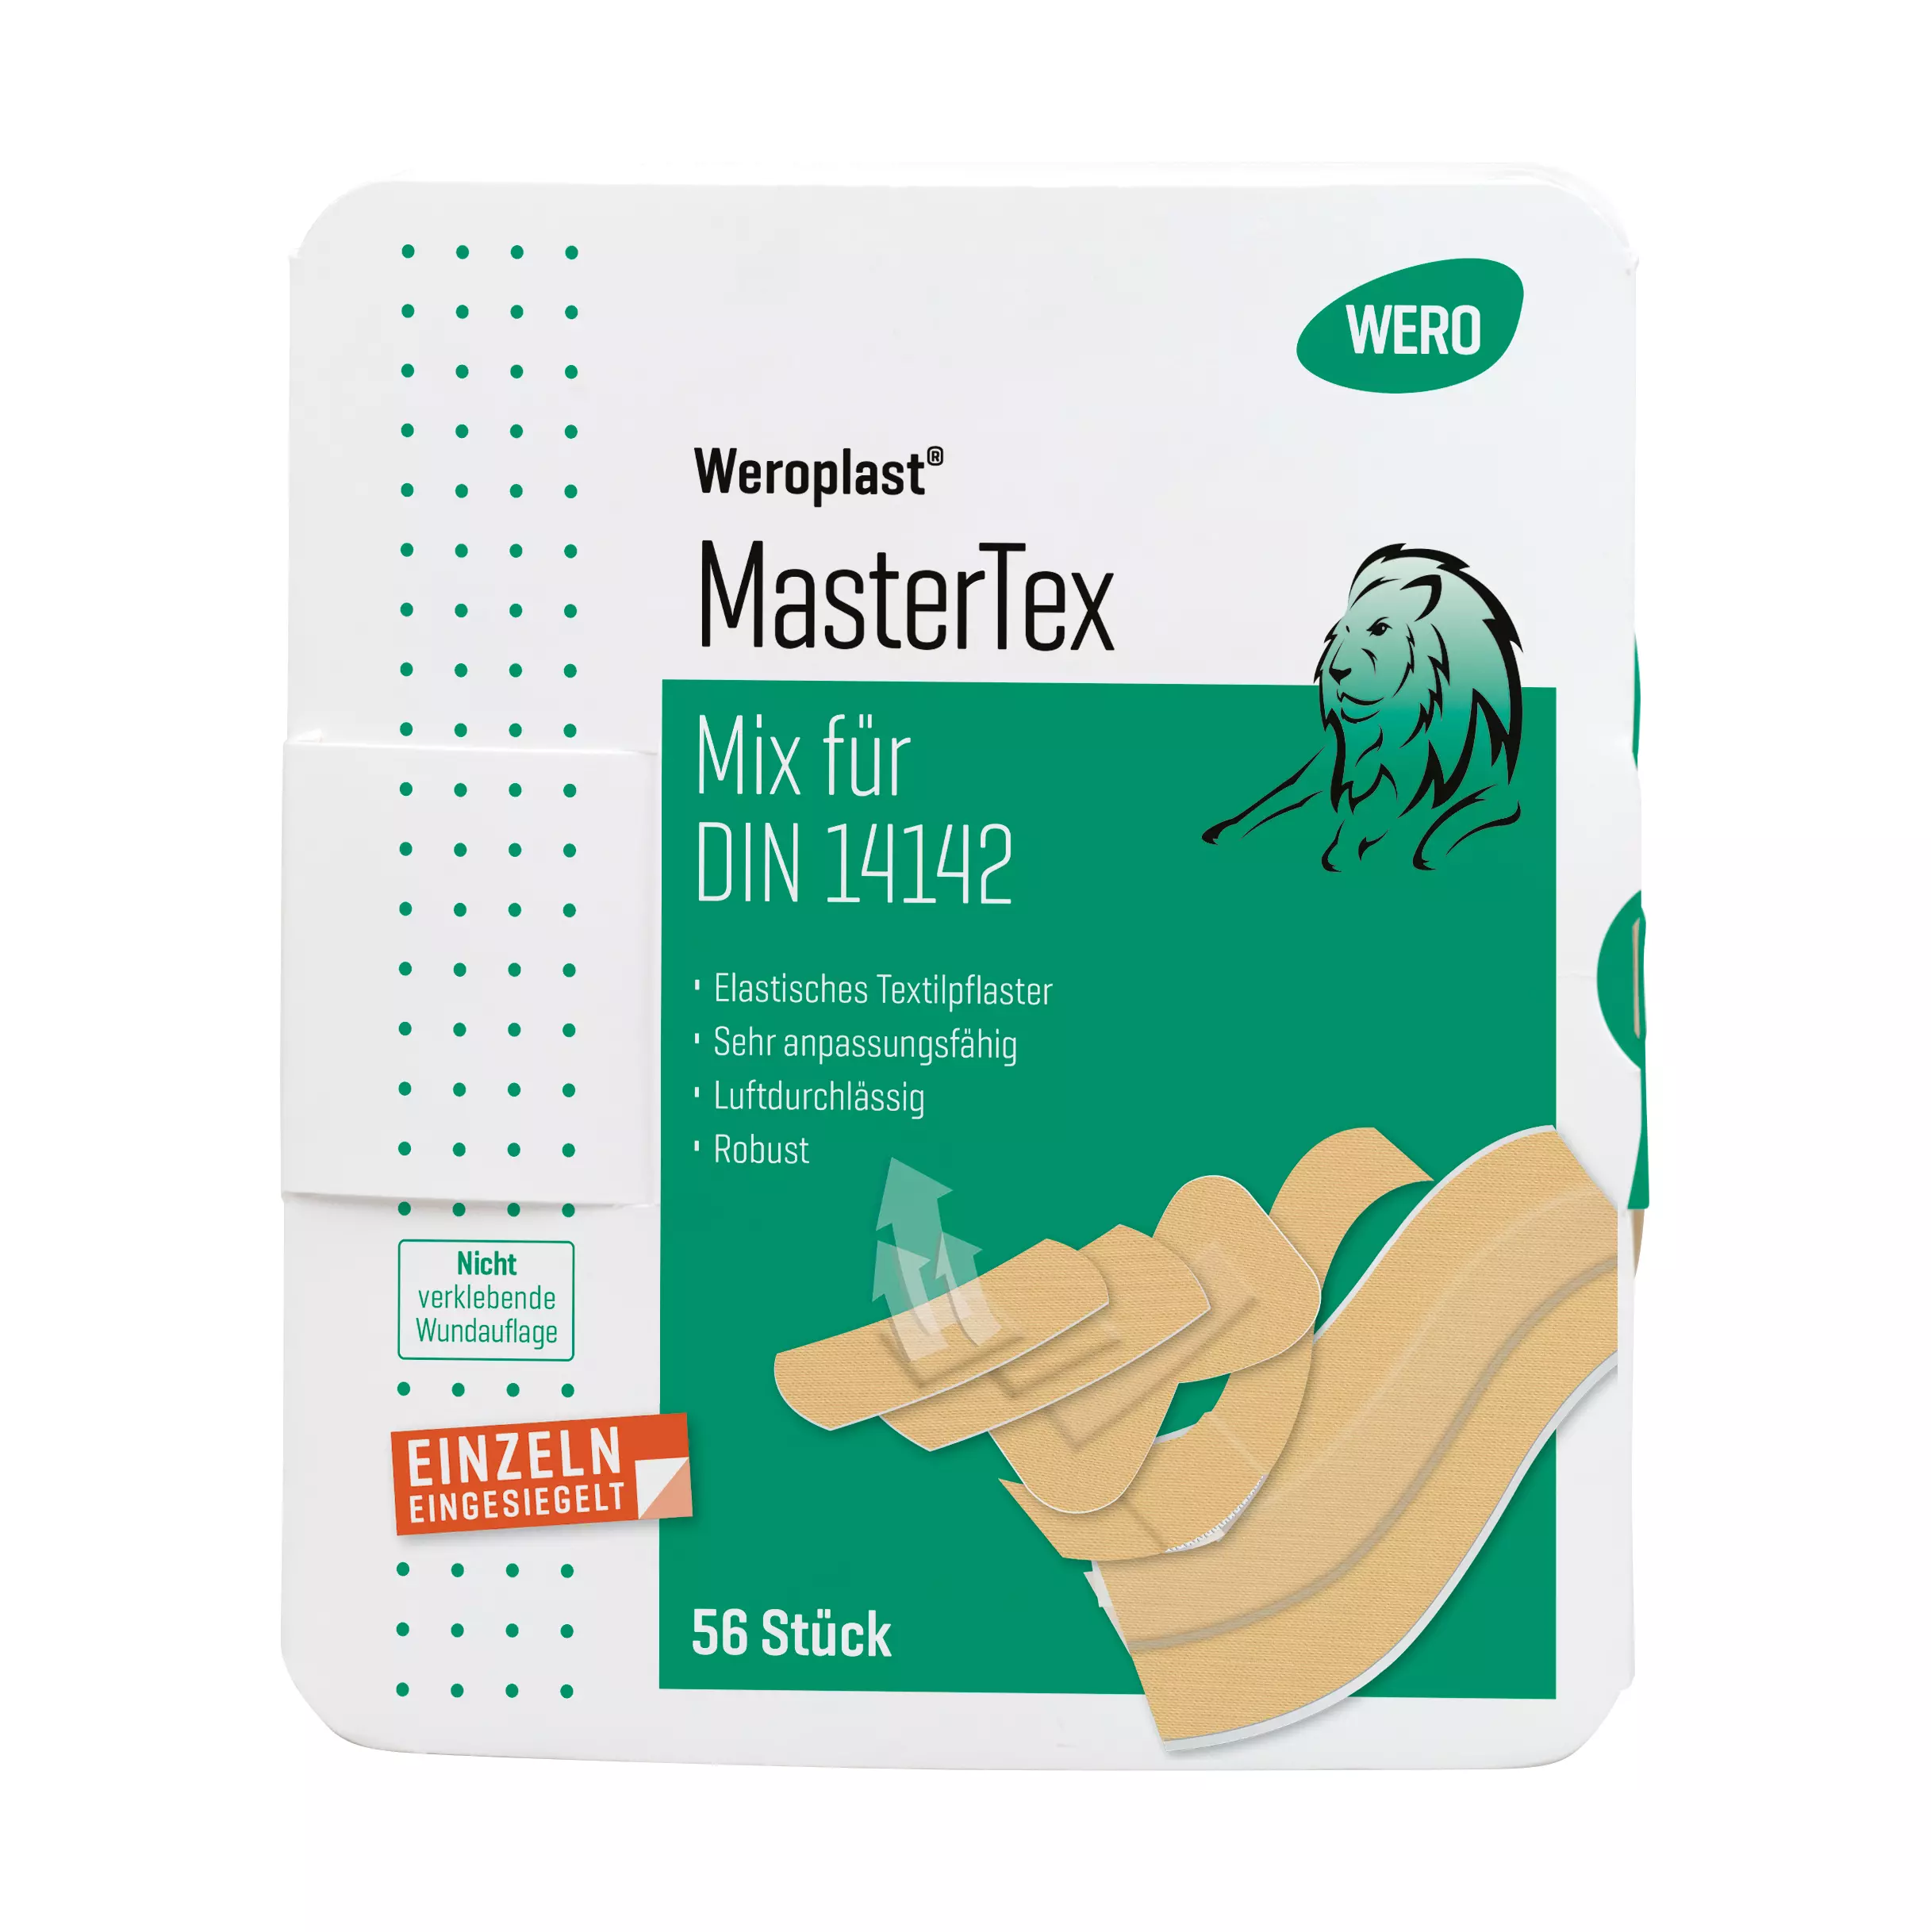 Plaster set Weroplast® MasterTex - DIN 14142